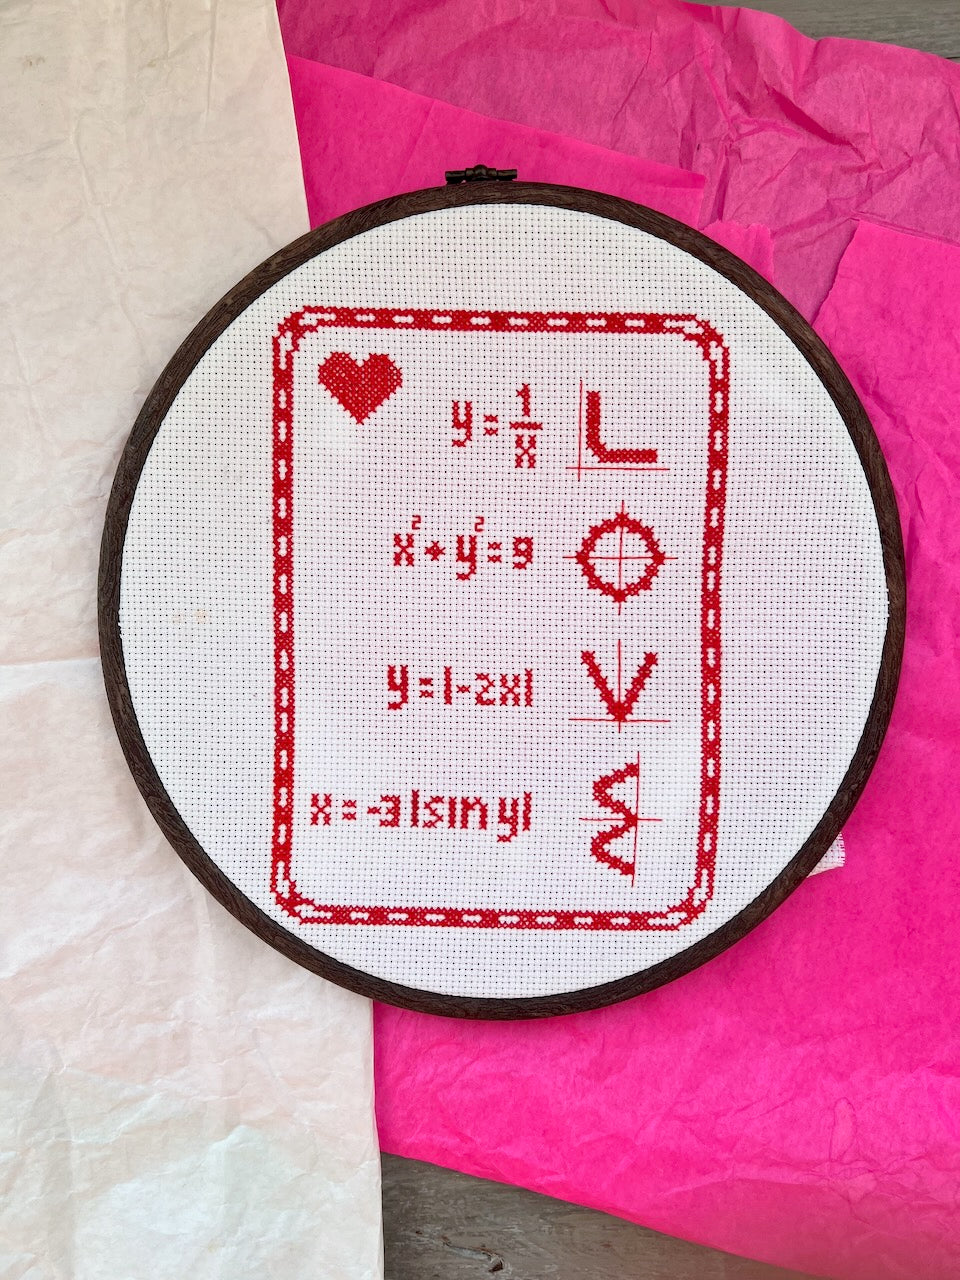 Love lines - cross stitch pattern